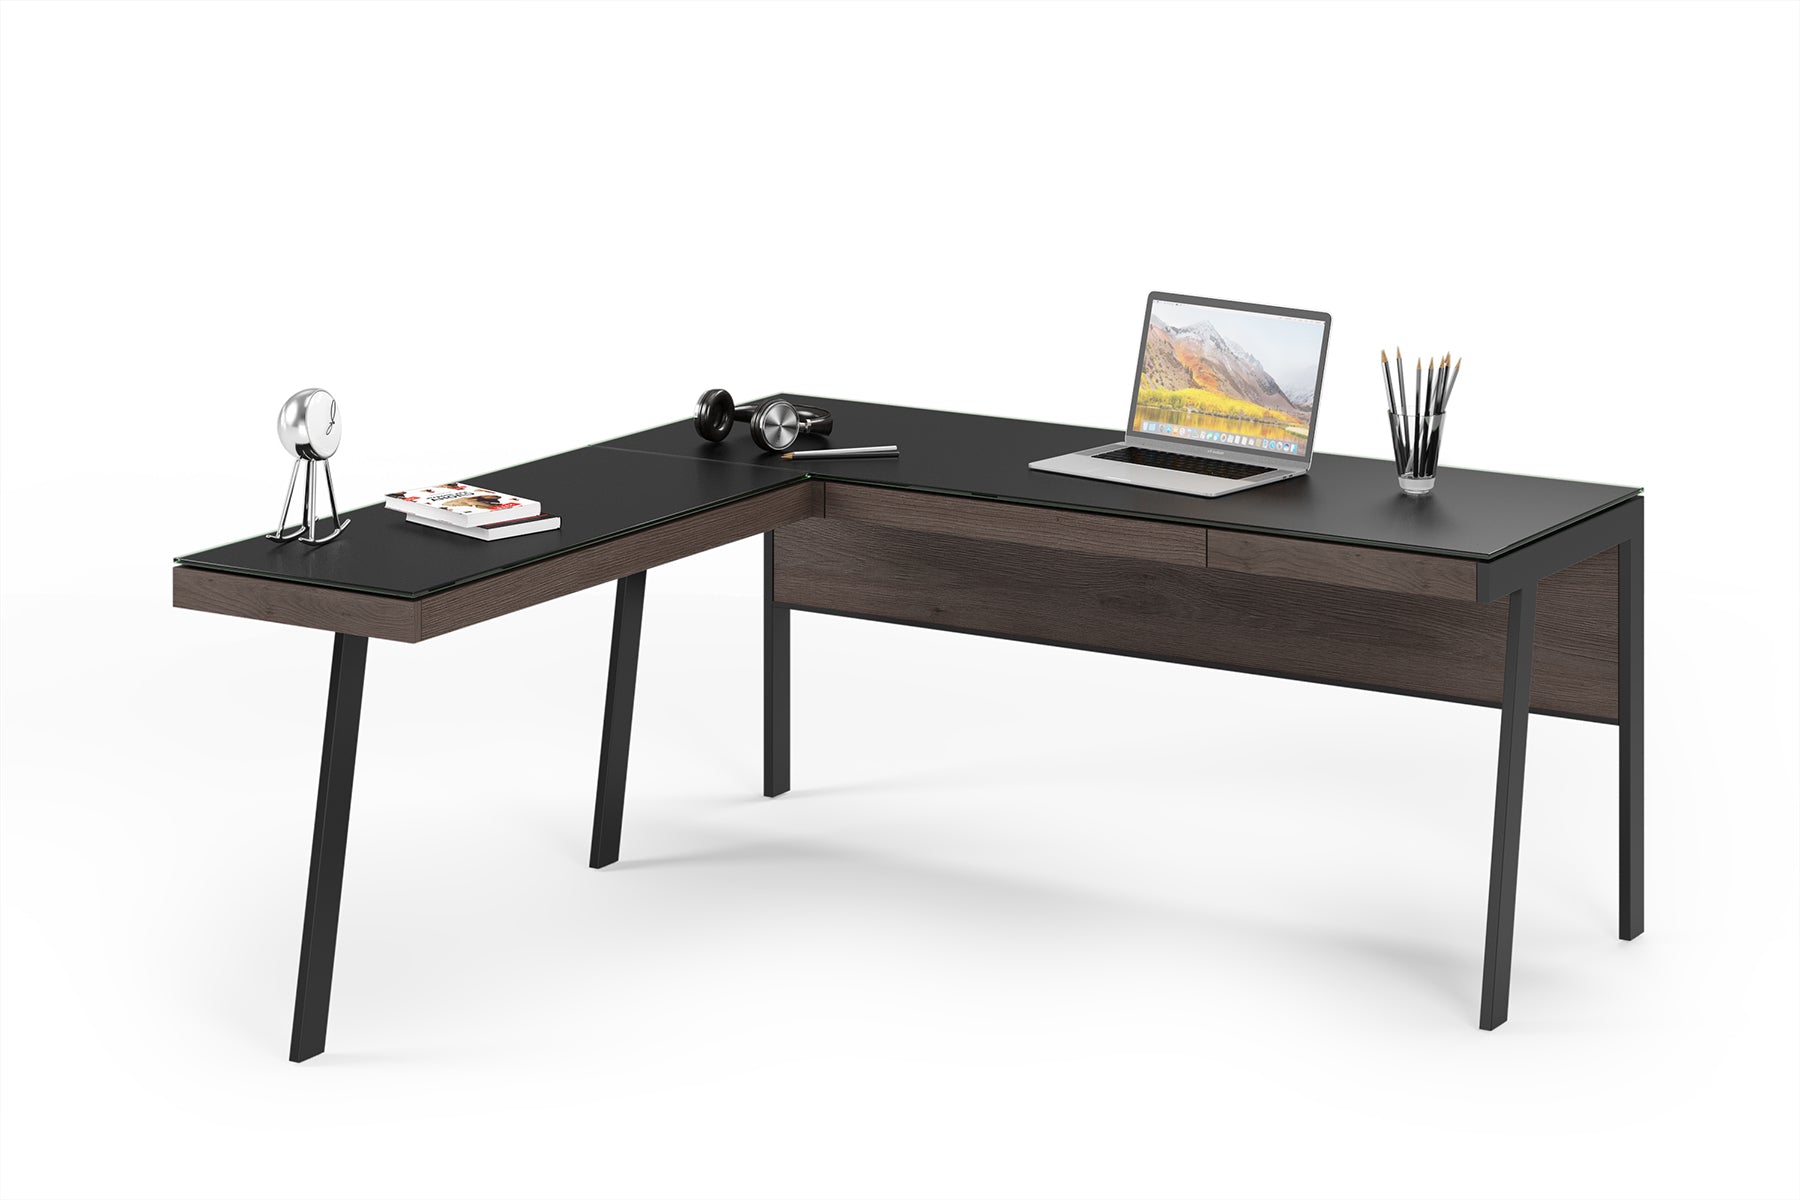 Sigma 6901 Modern Home Office Desk